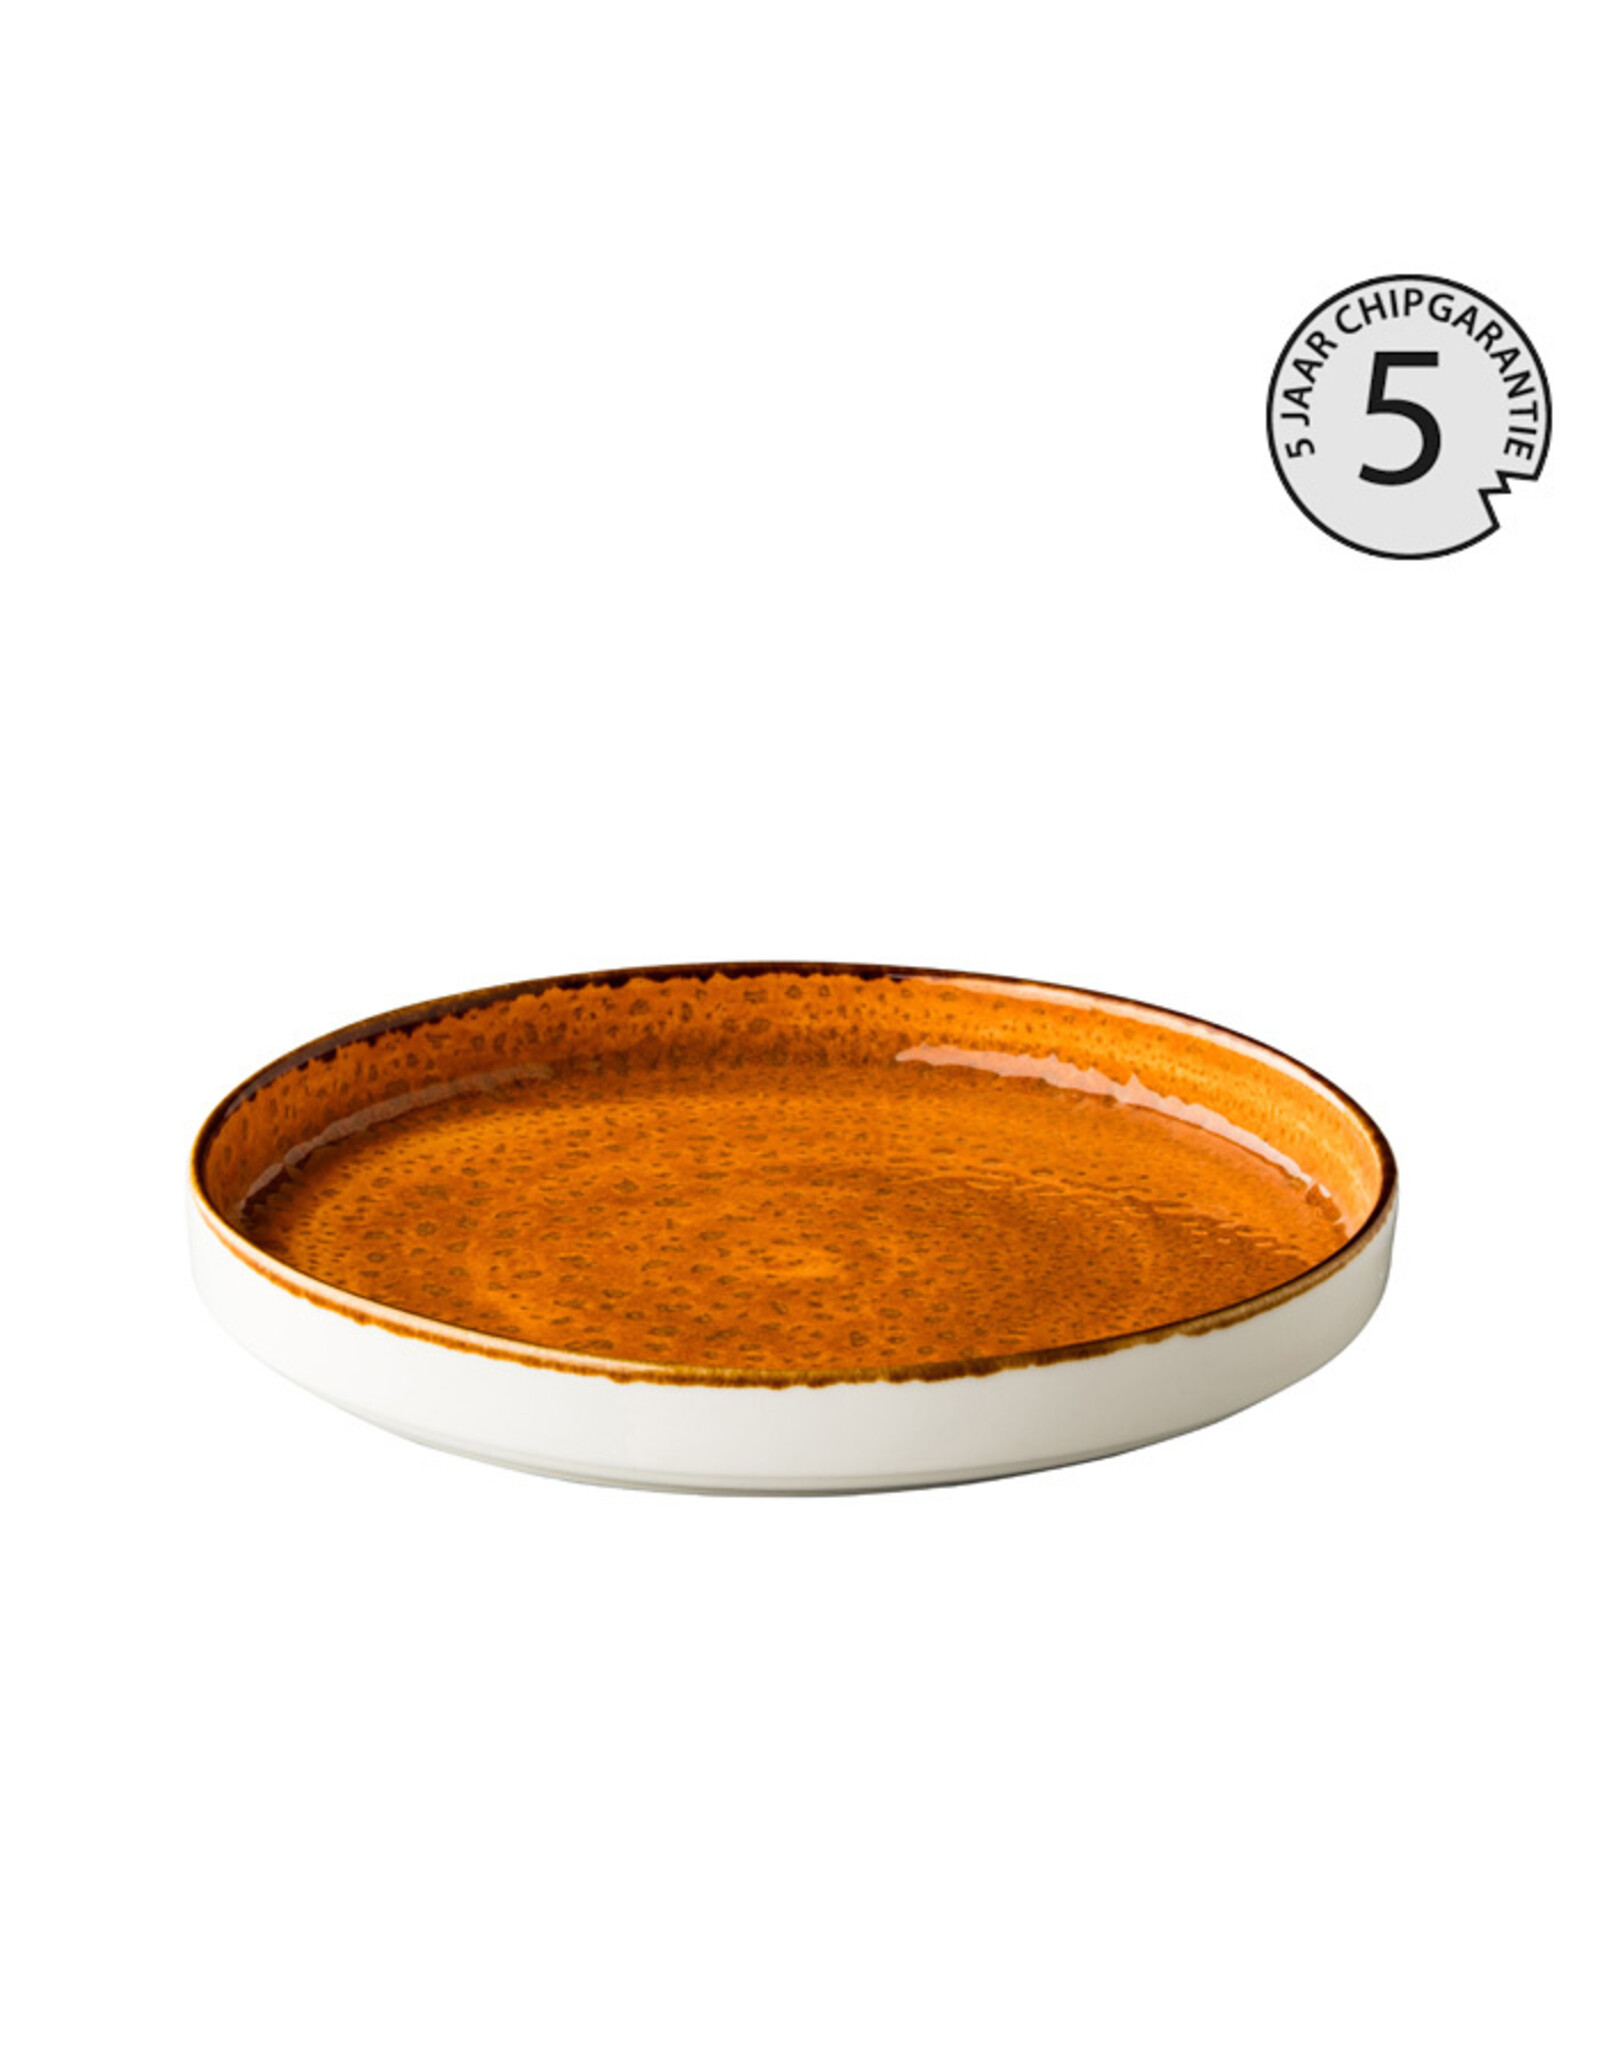 Stylepoint Jersey rond bord opstaande rand oranje 20,4 cm stapelbaar - 5 jaar chipgarantie